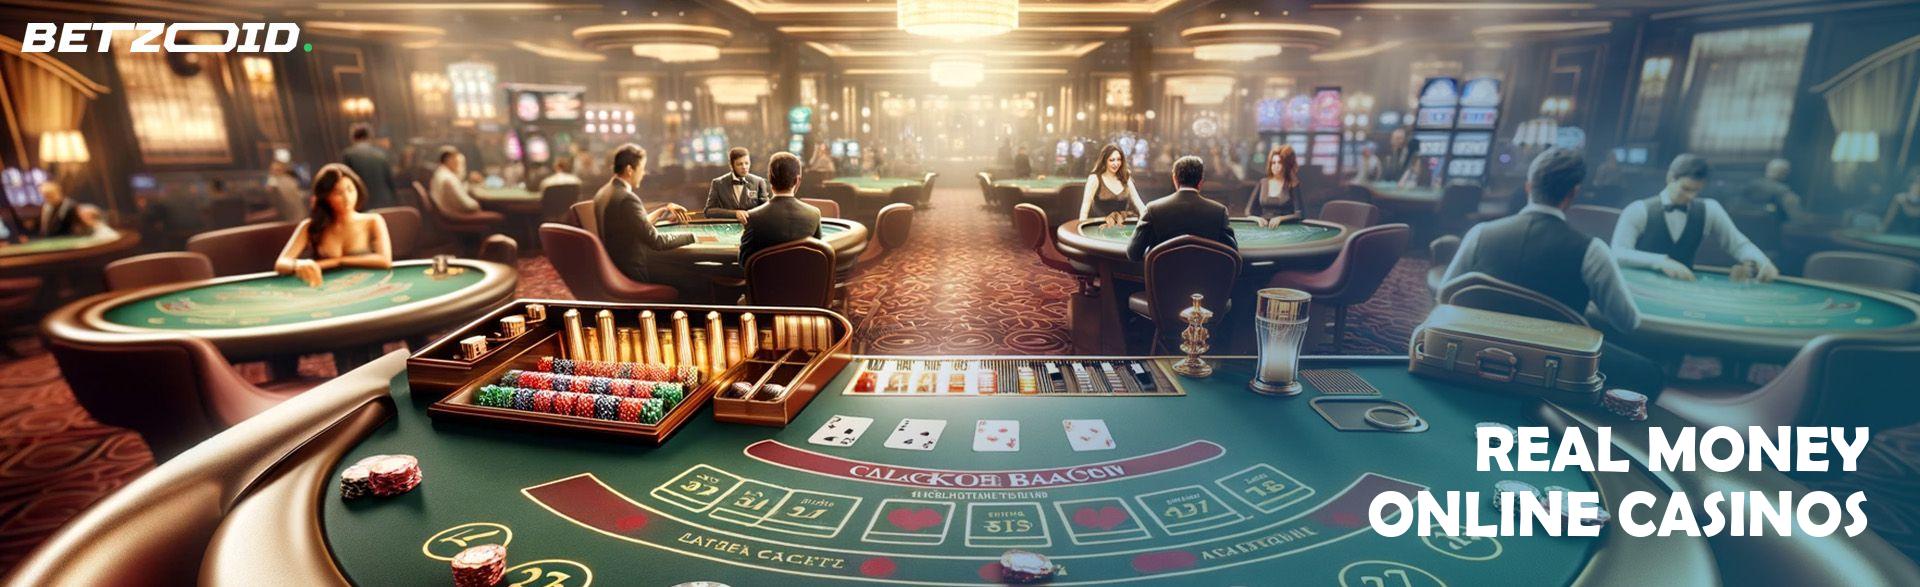 Real Money Online Casinos.